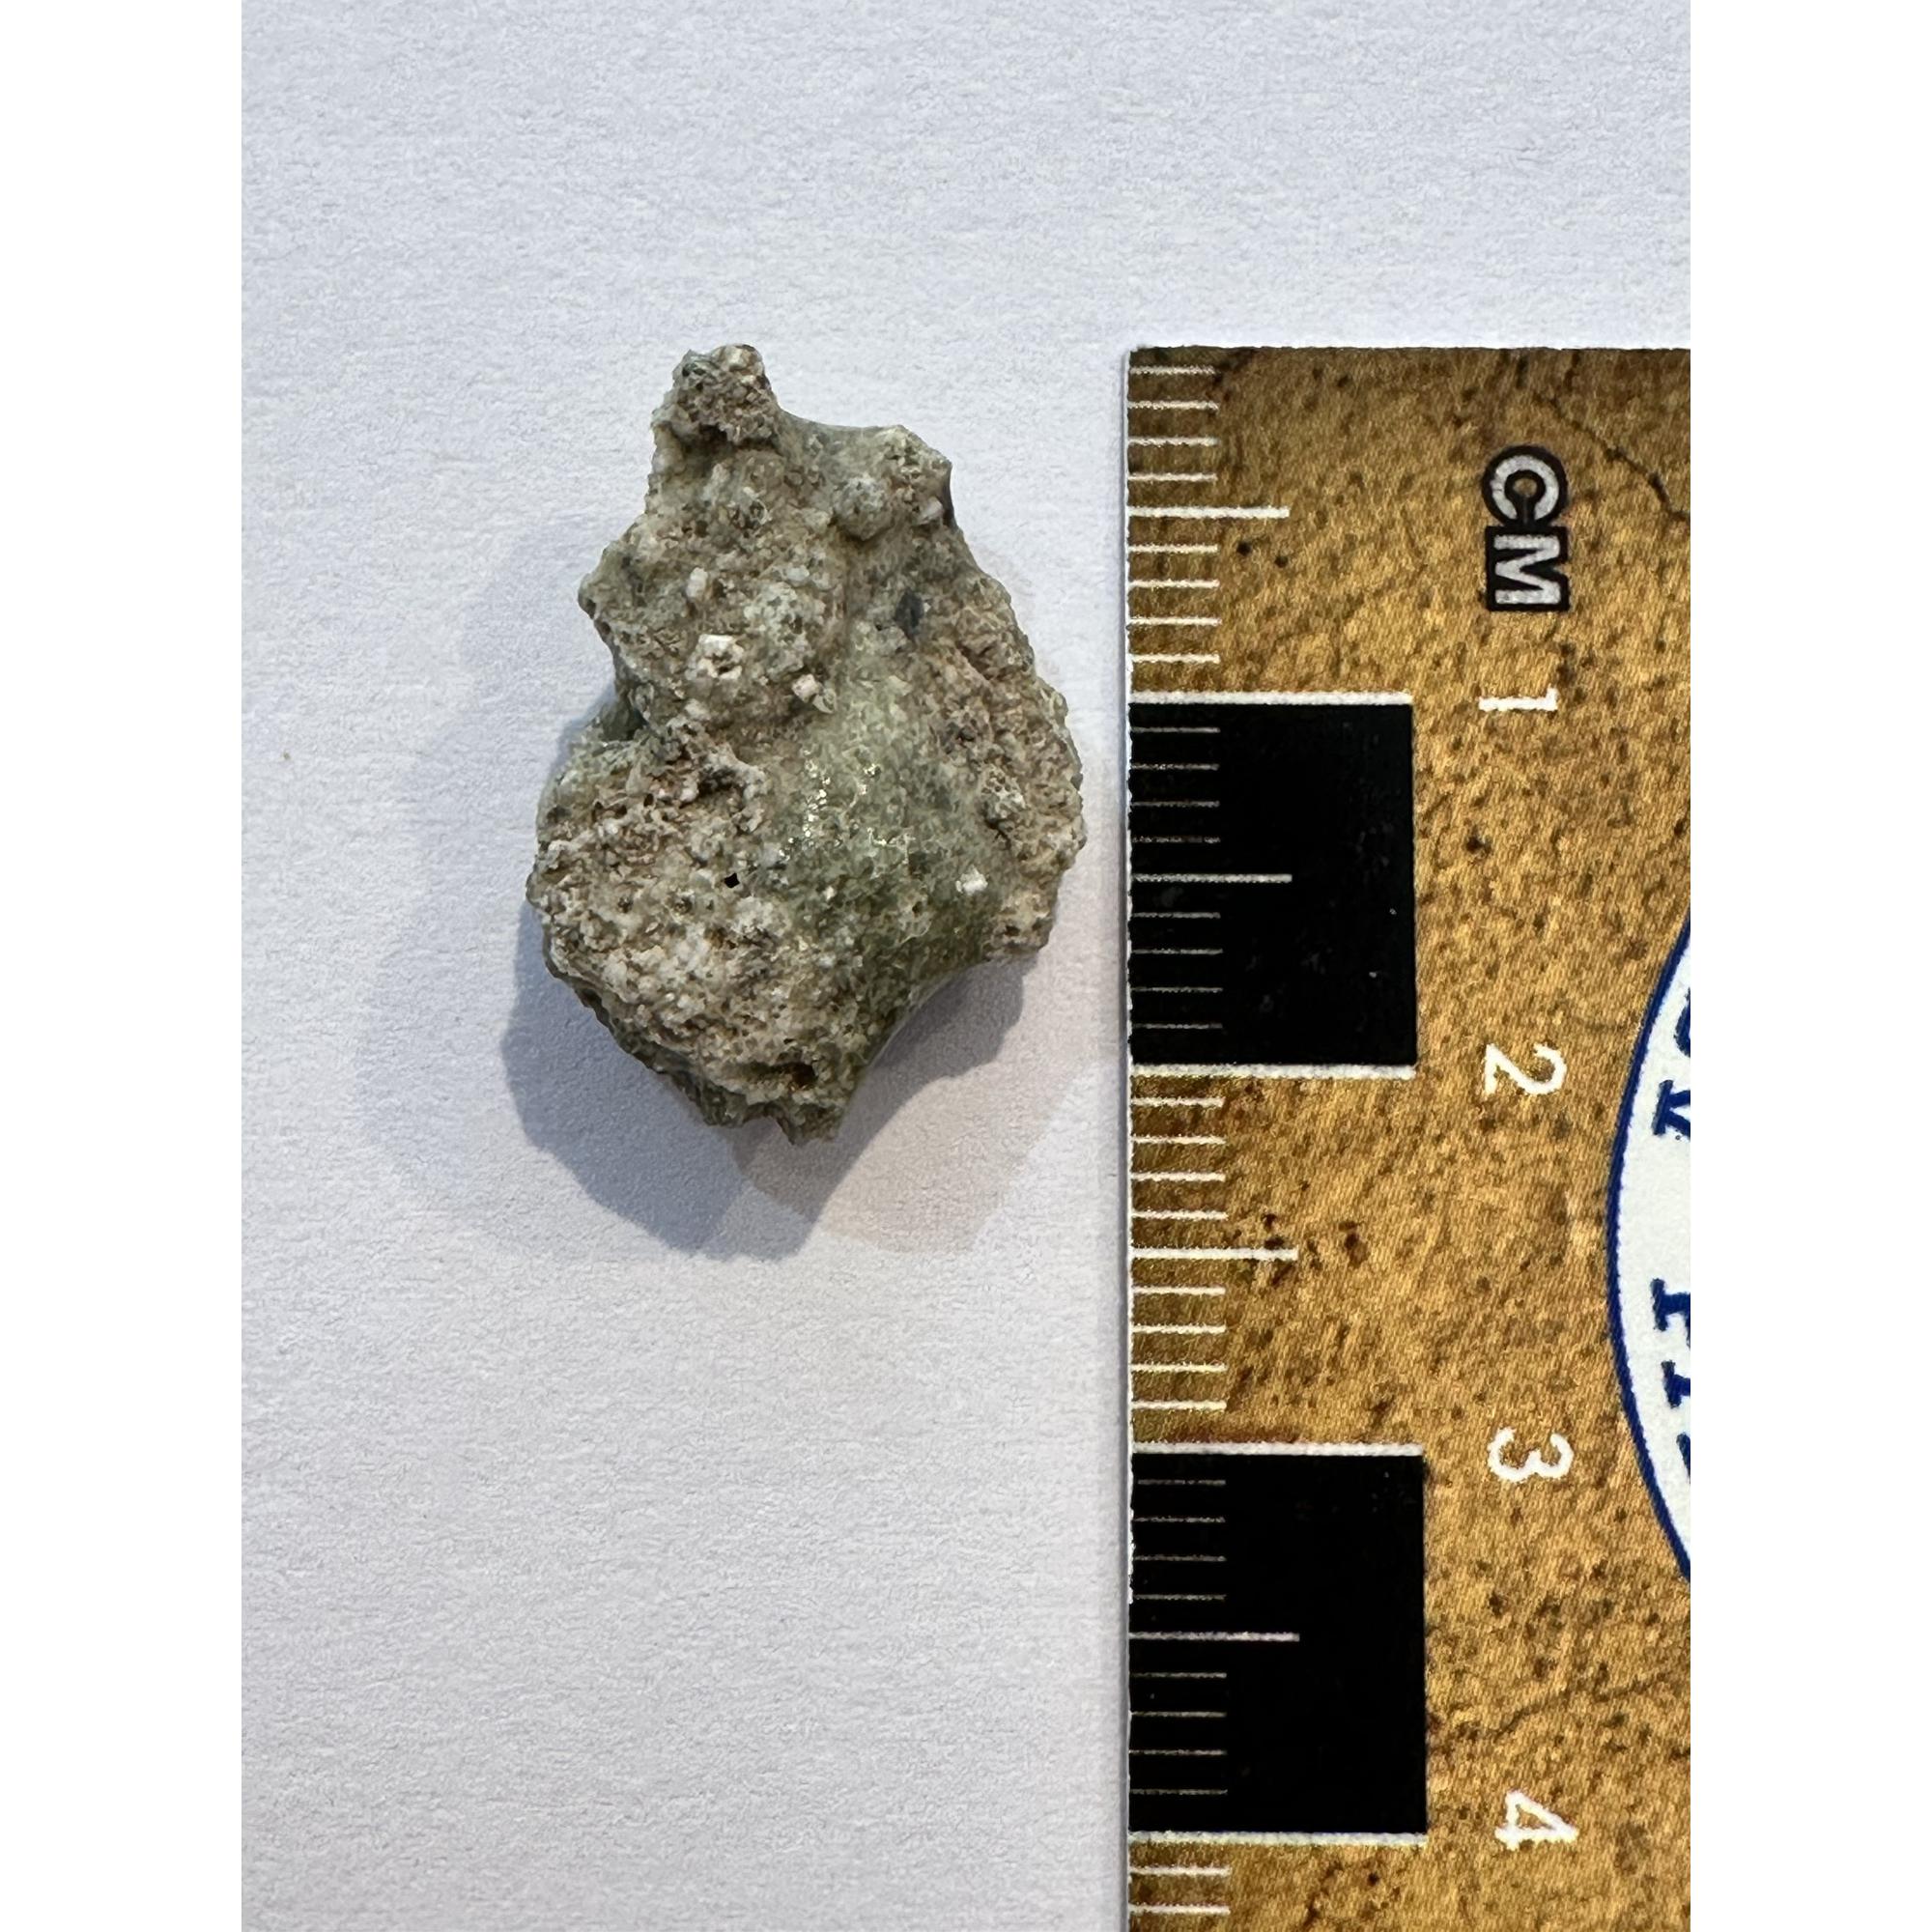 Trinitite Rock, Alamogordo, New Mexico, Trinity test site Prehistoric Online